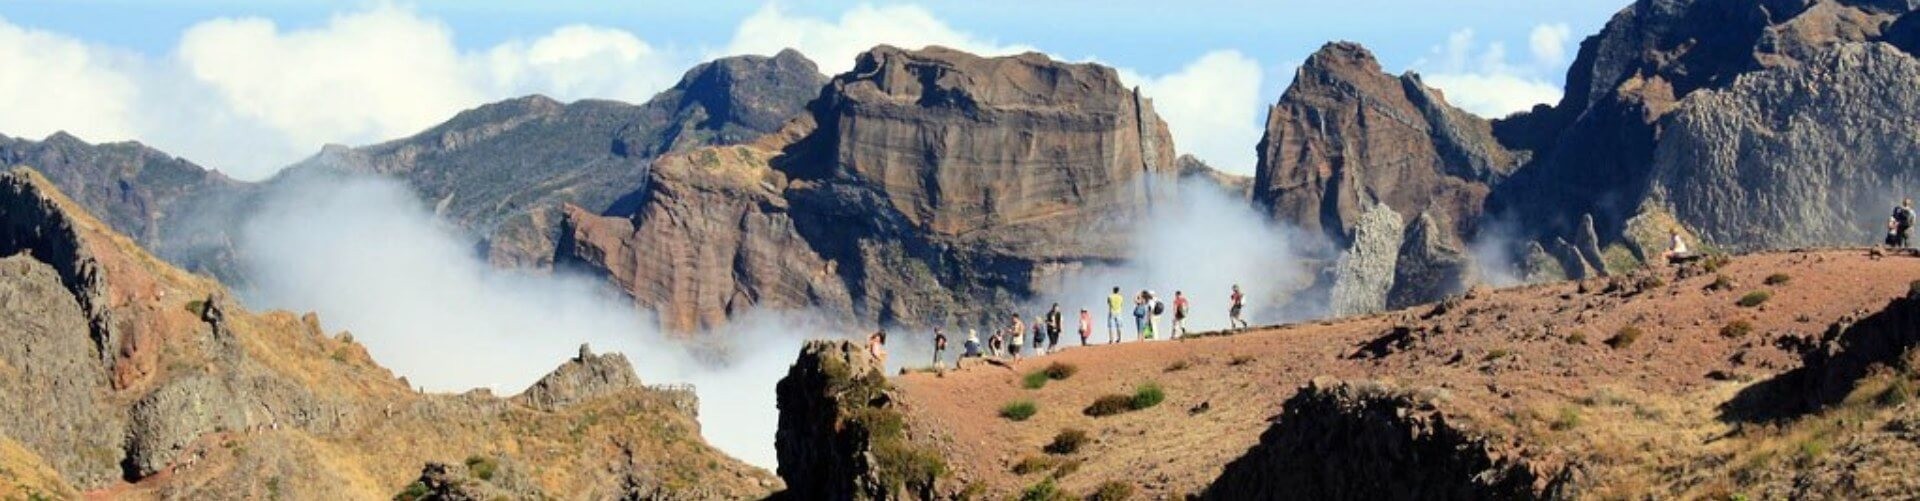 PR1 Vereda do Areeiro Hiking Trail in Madeira Island